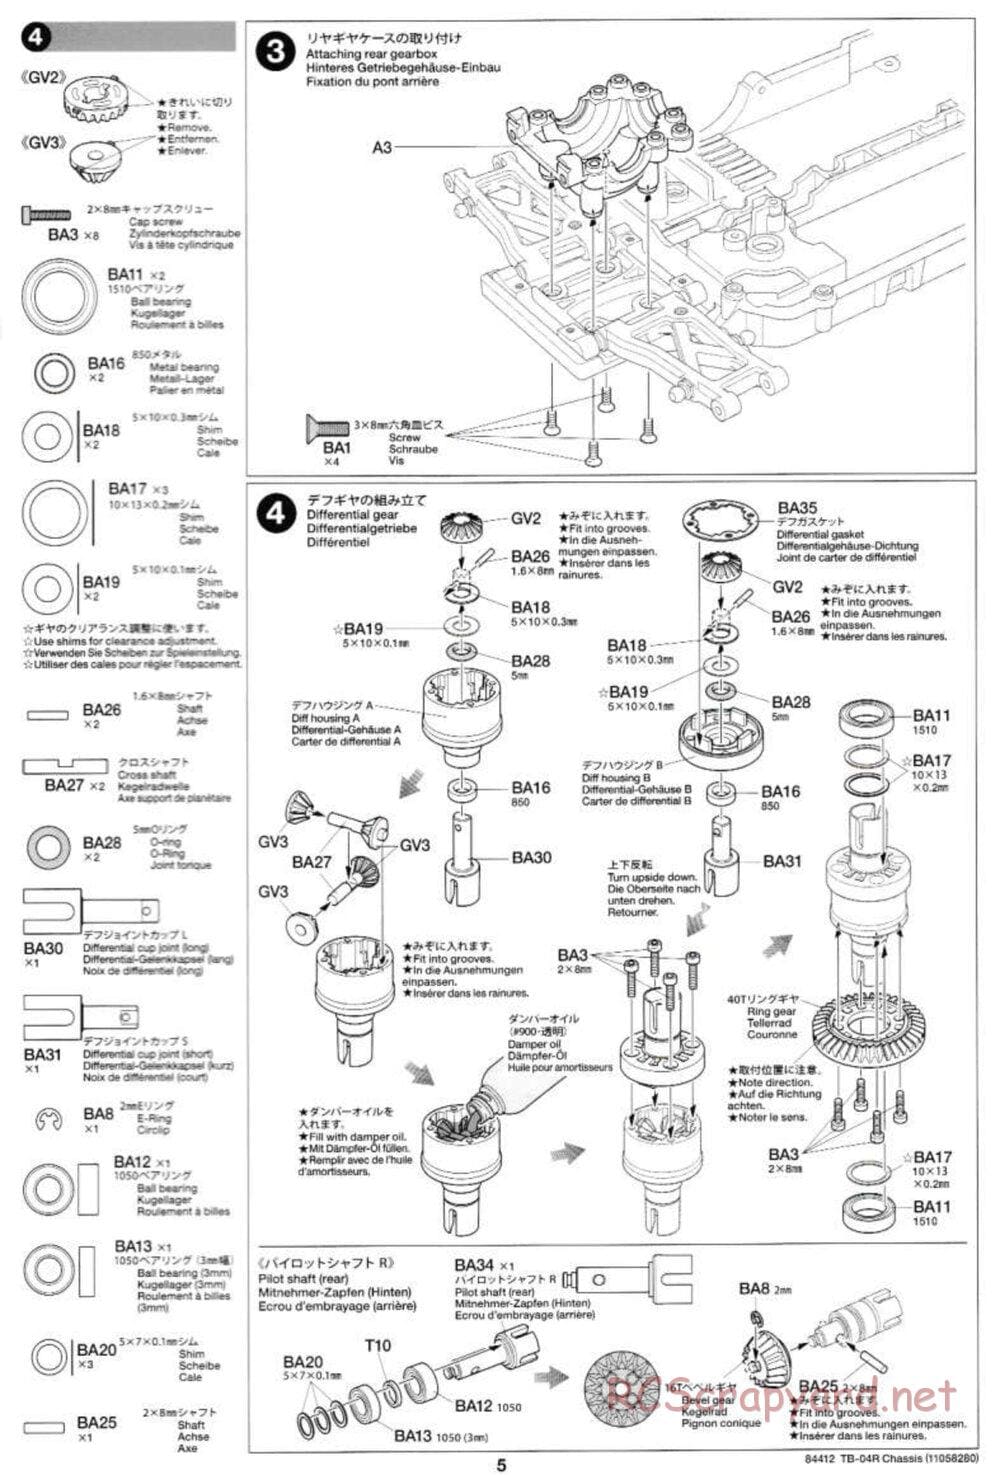 Tamiya - TB-04R Chassis Chassis - Manual - Page 5